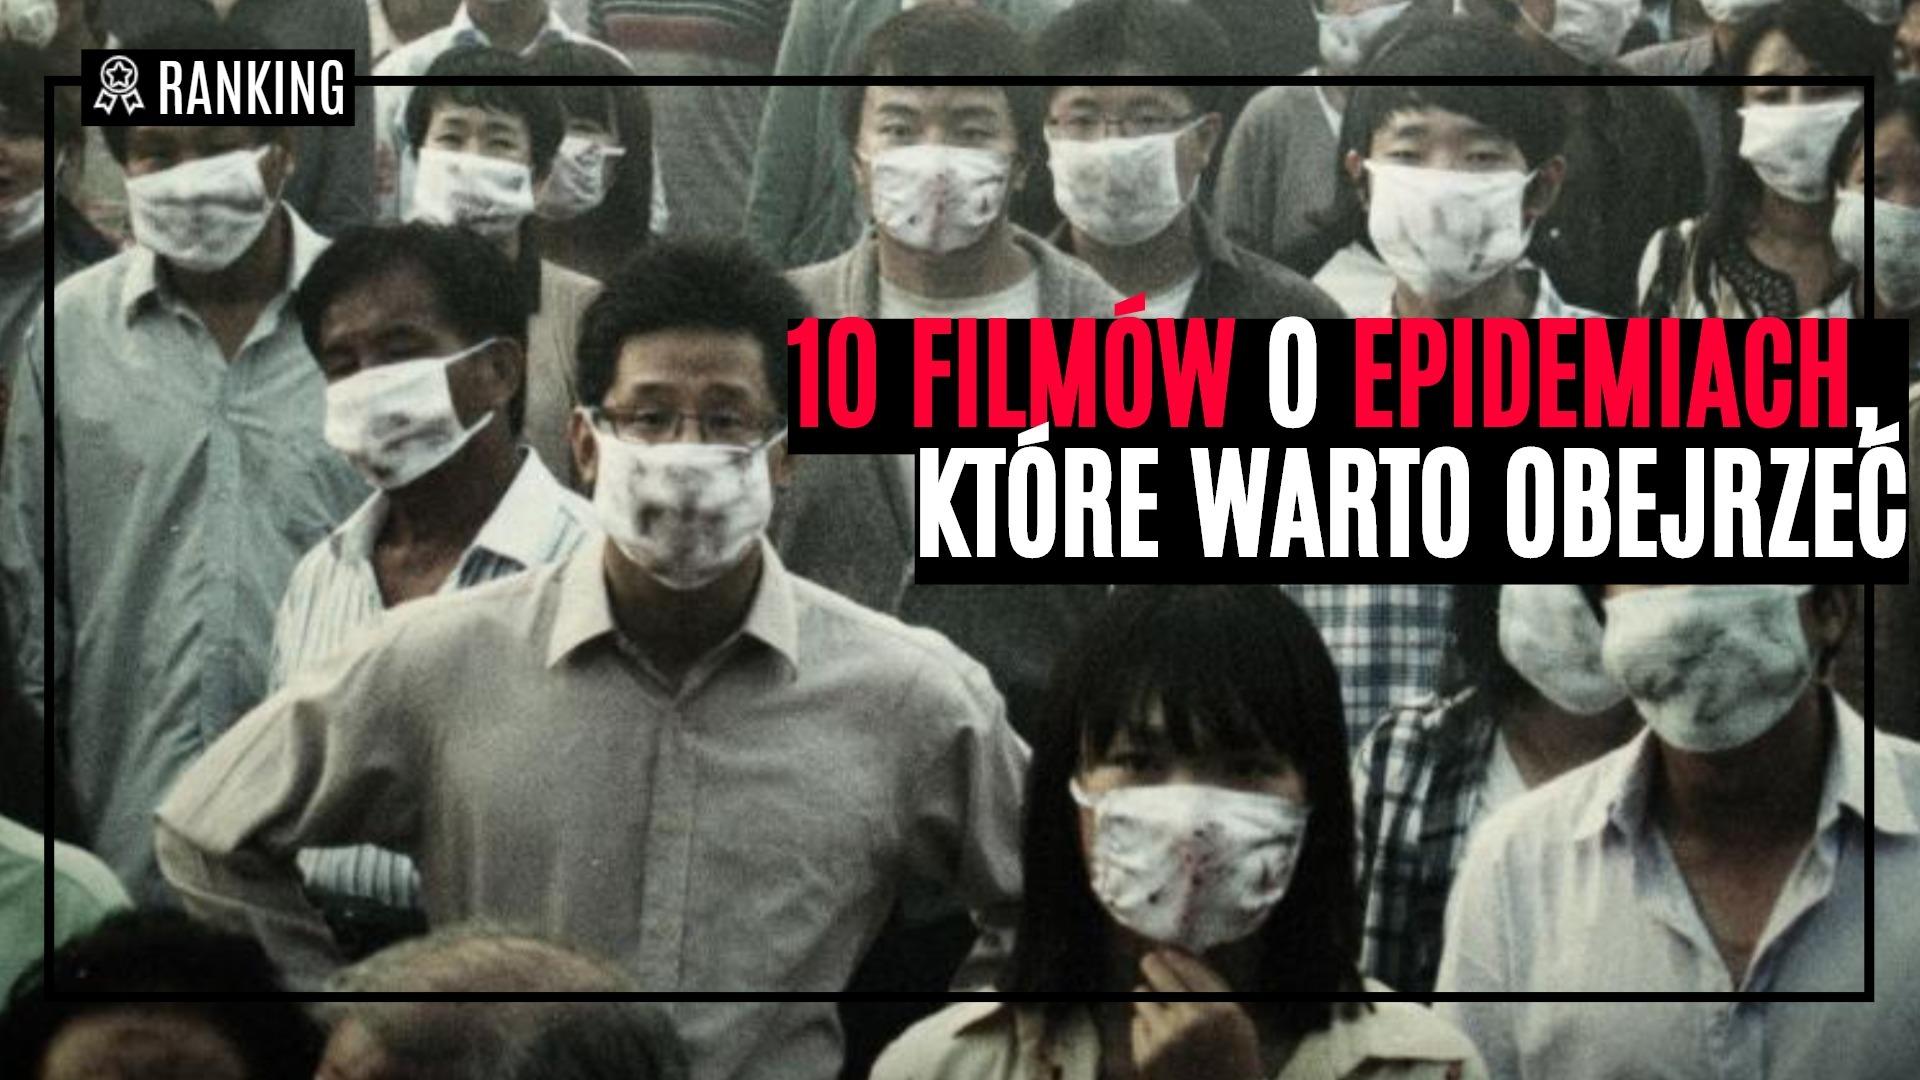 filmy o epidemii filmy o epidemiach epidemie w filmach epidemie w kinie